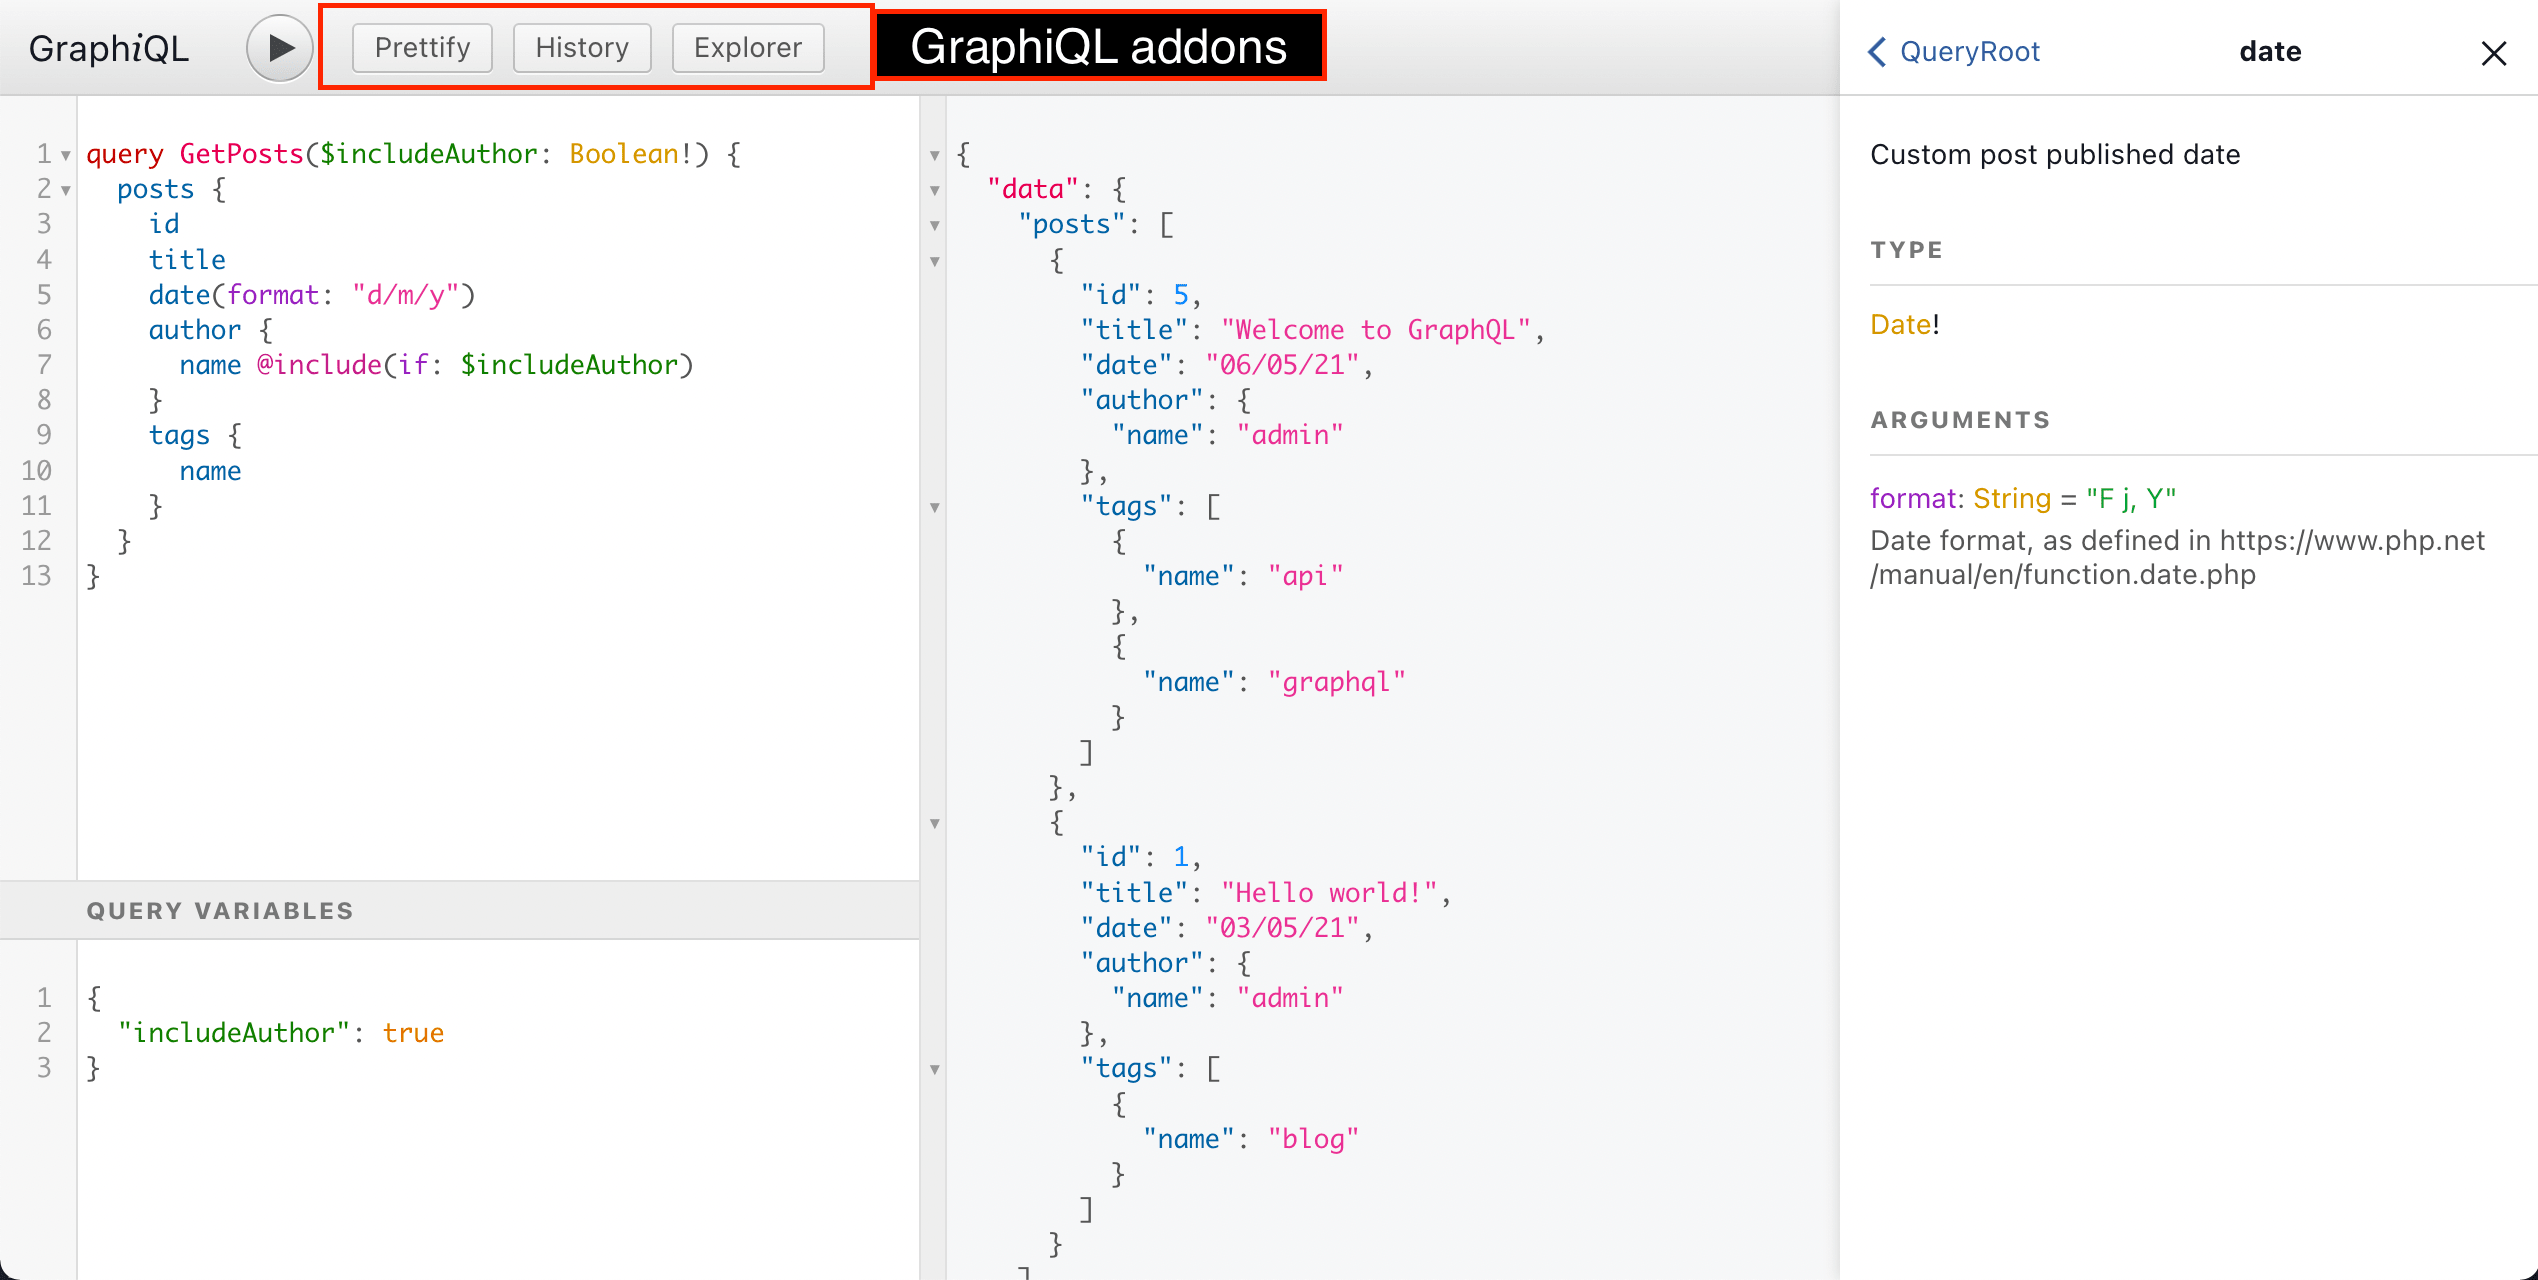 GraphiQL add-ons